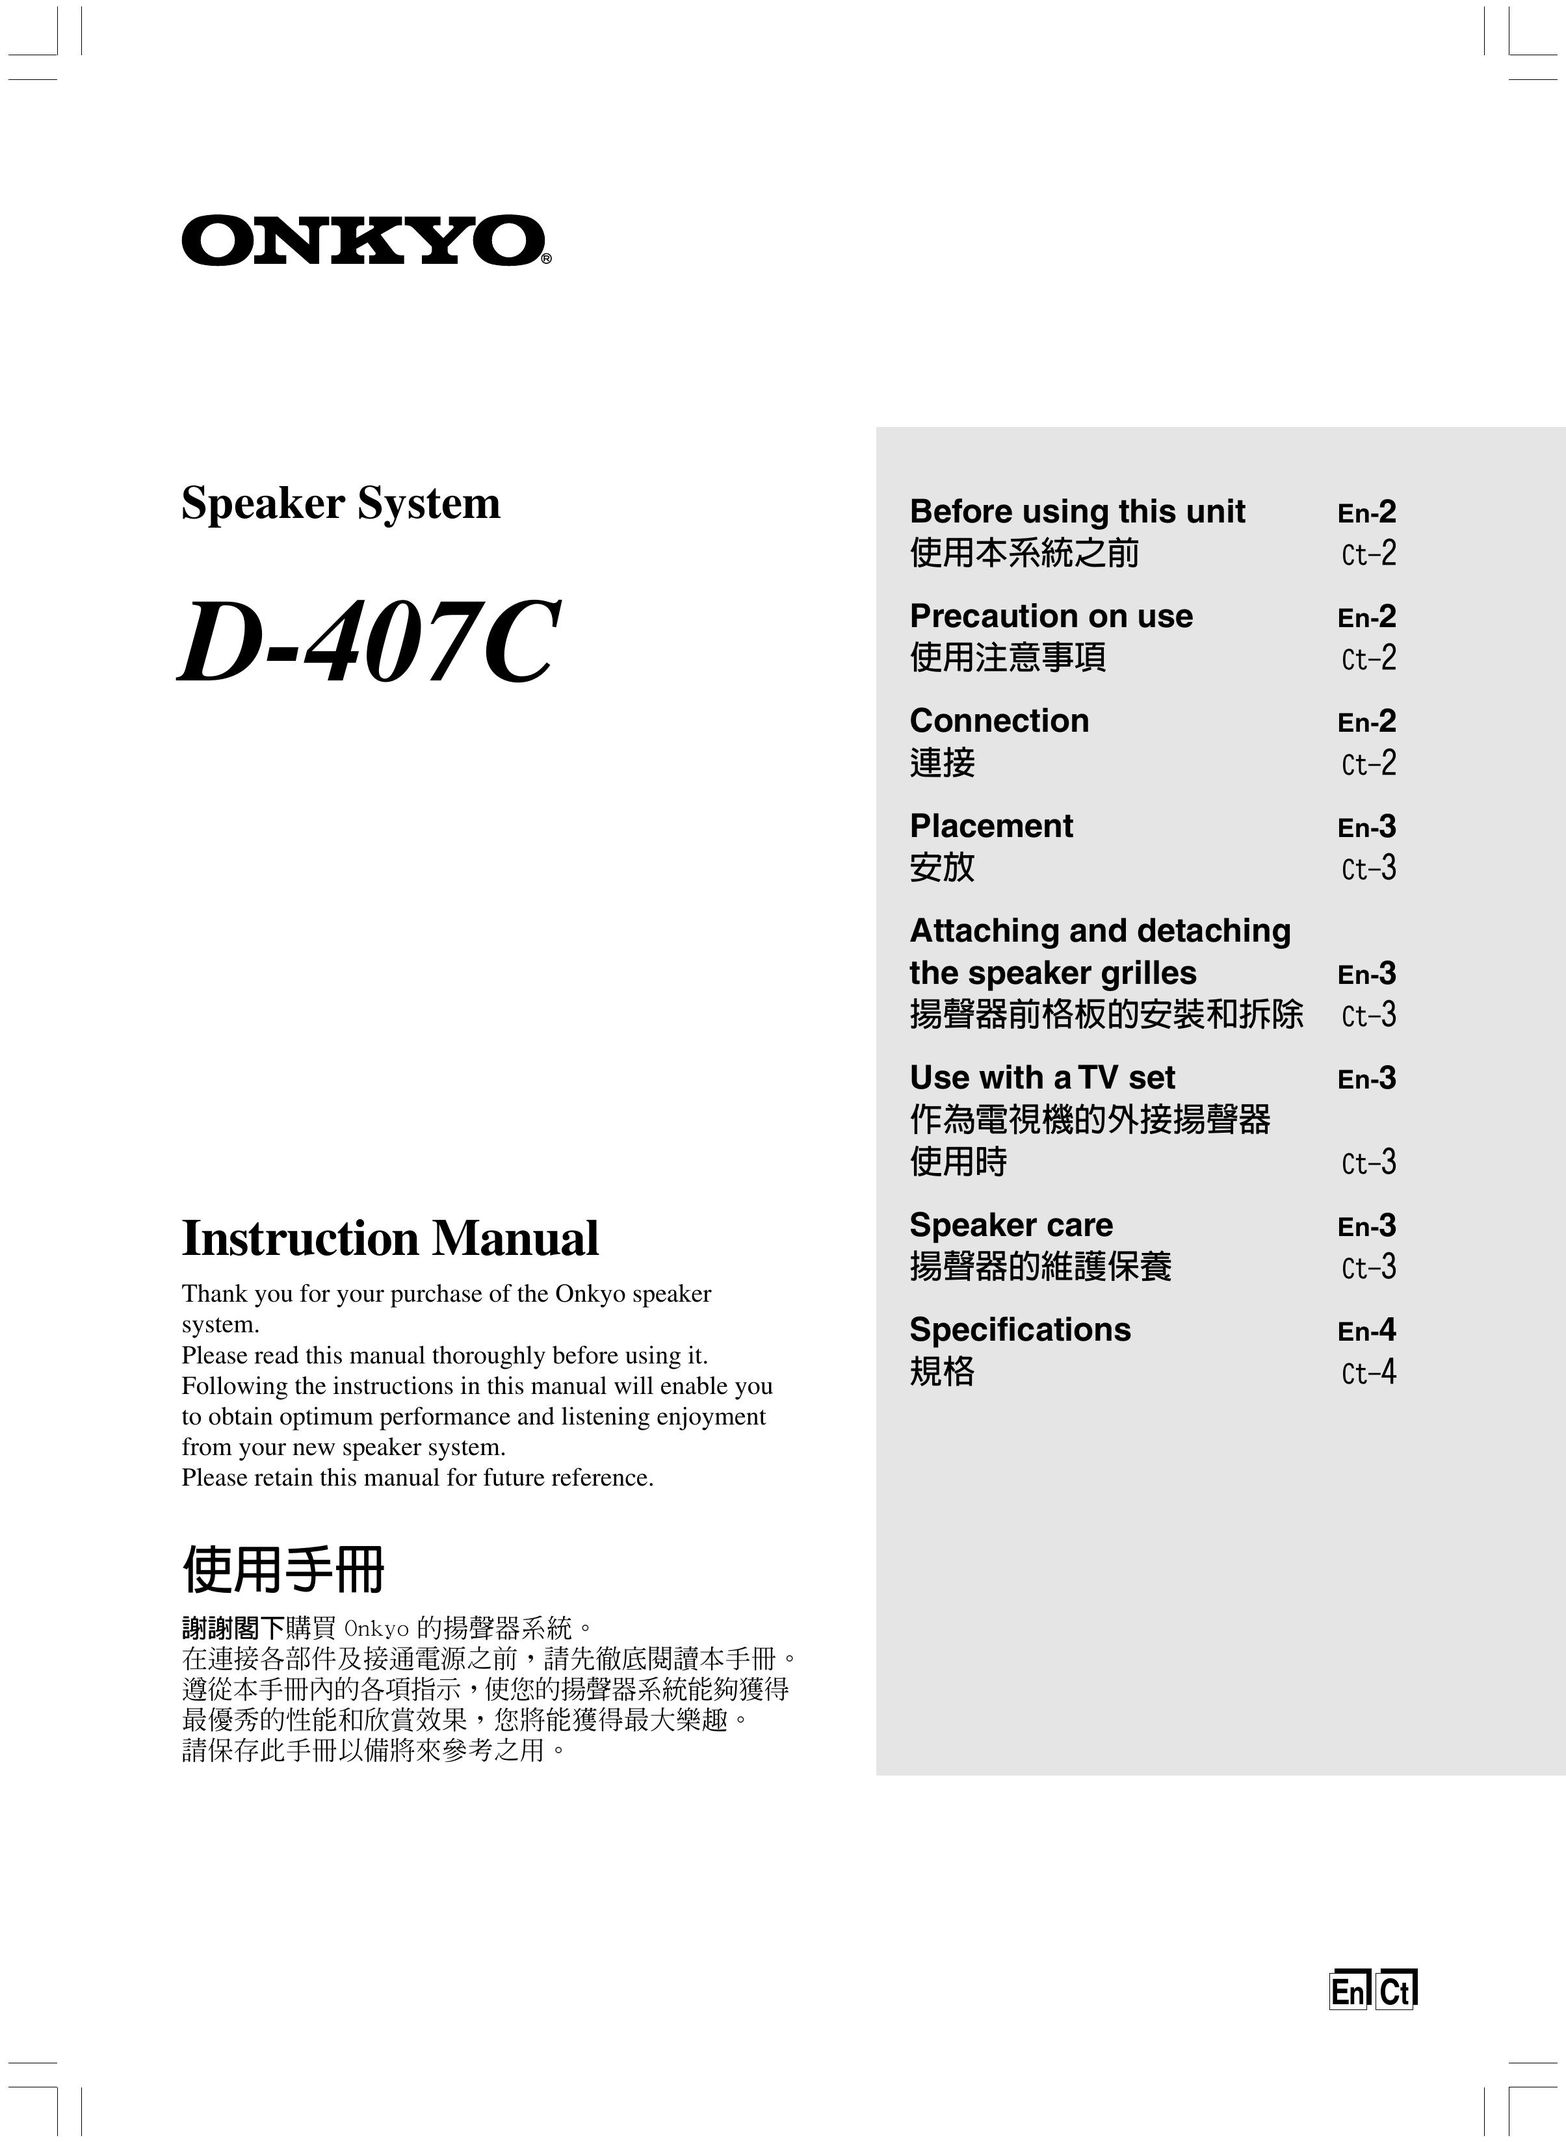 Onkyo D-407C Portable Speaker User Manual